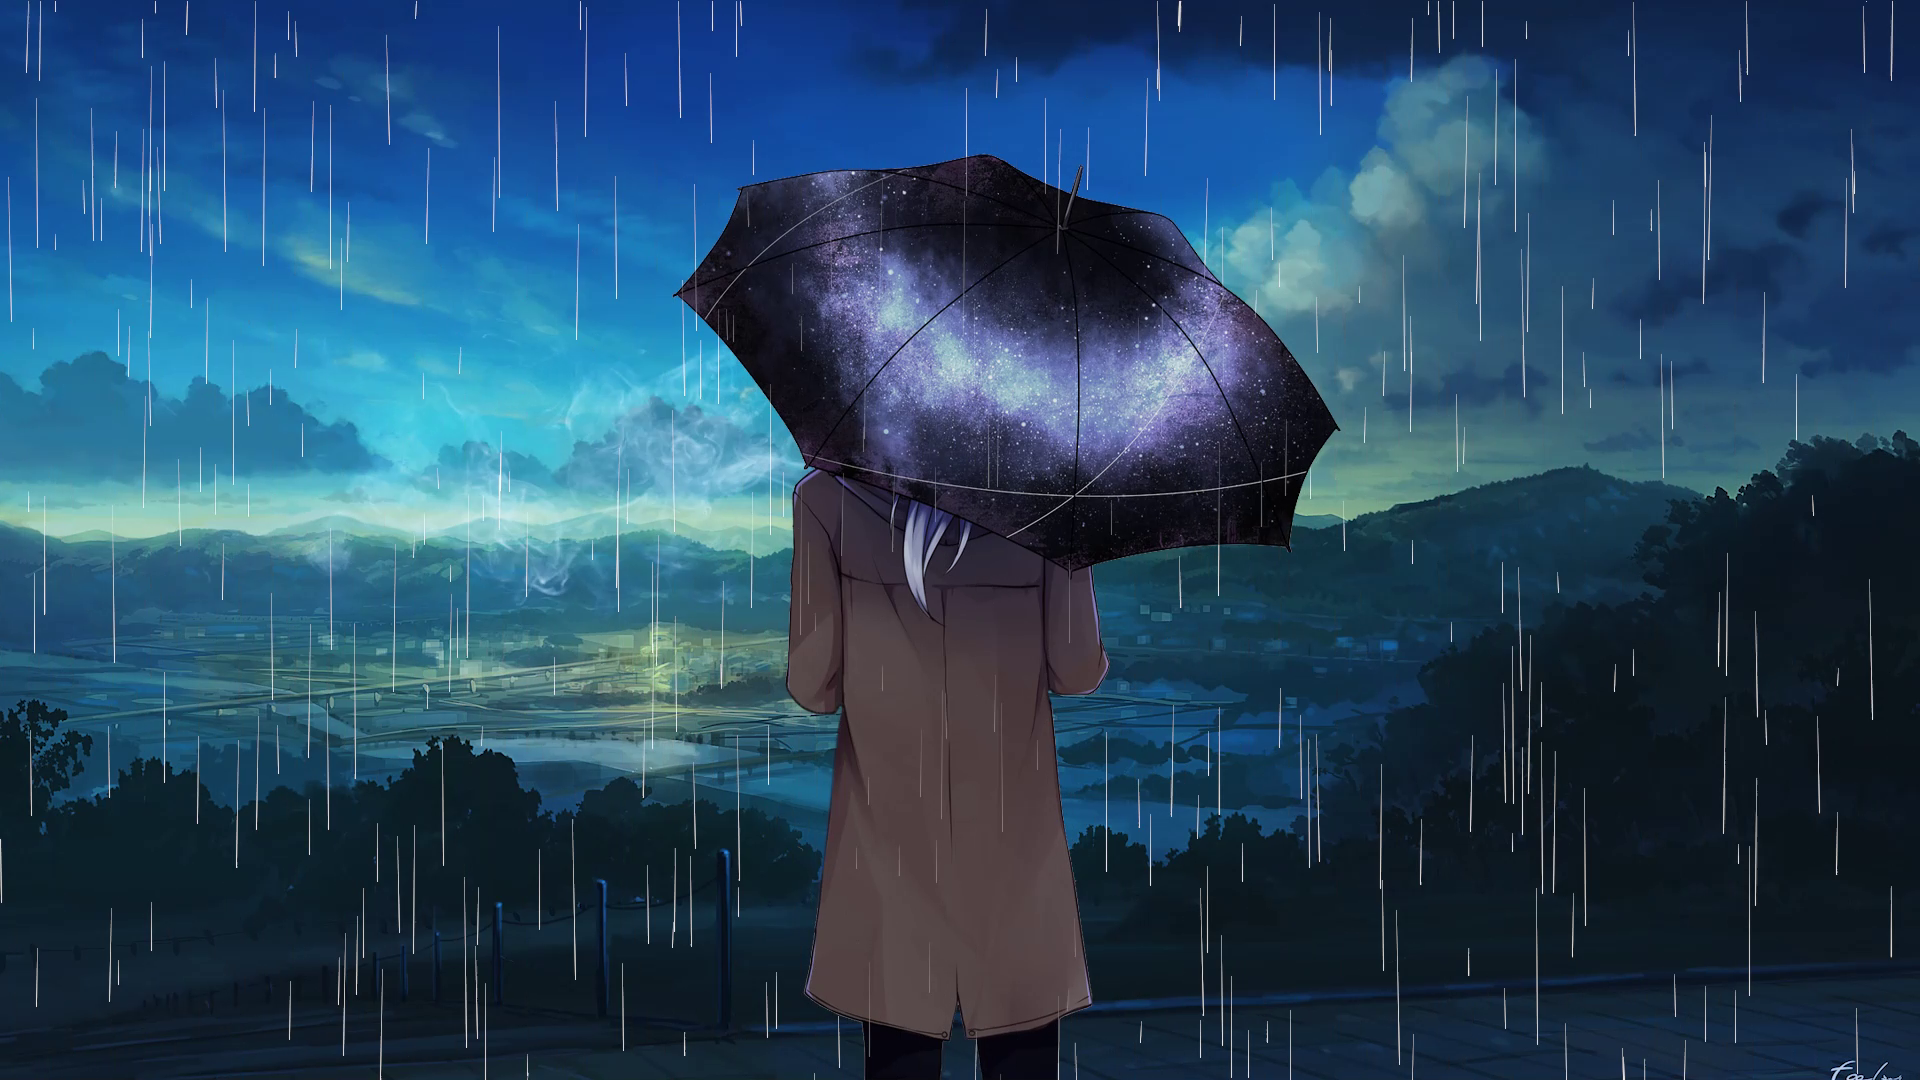 Anime Rain GIFs | GIFDB.com